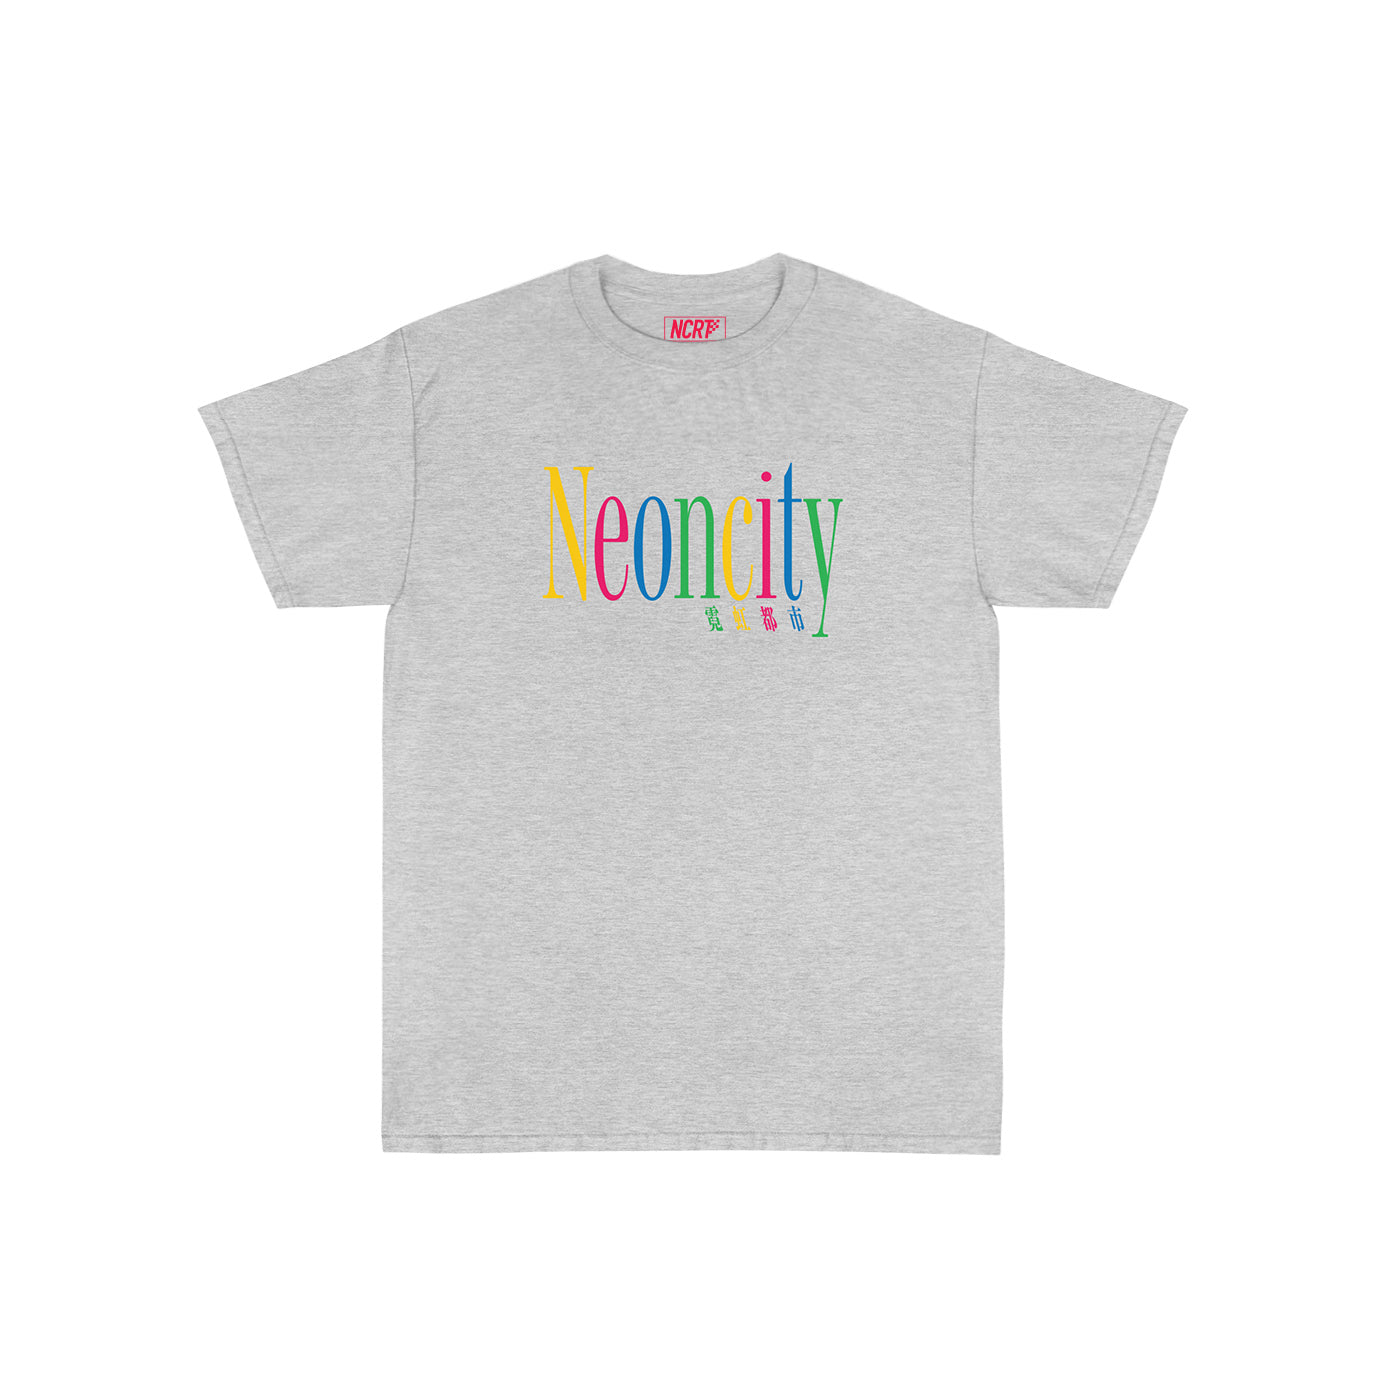 Neoncity 1992 T-Shirt (Grey) - NCRT | Neoncity Racing Team